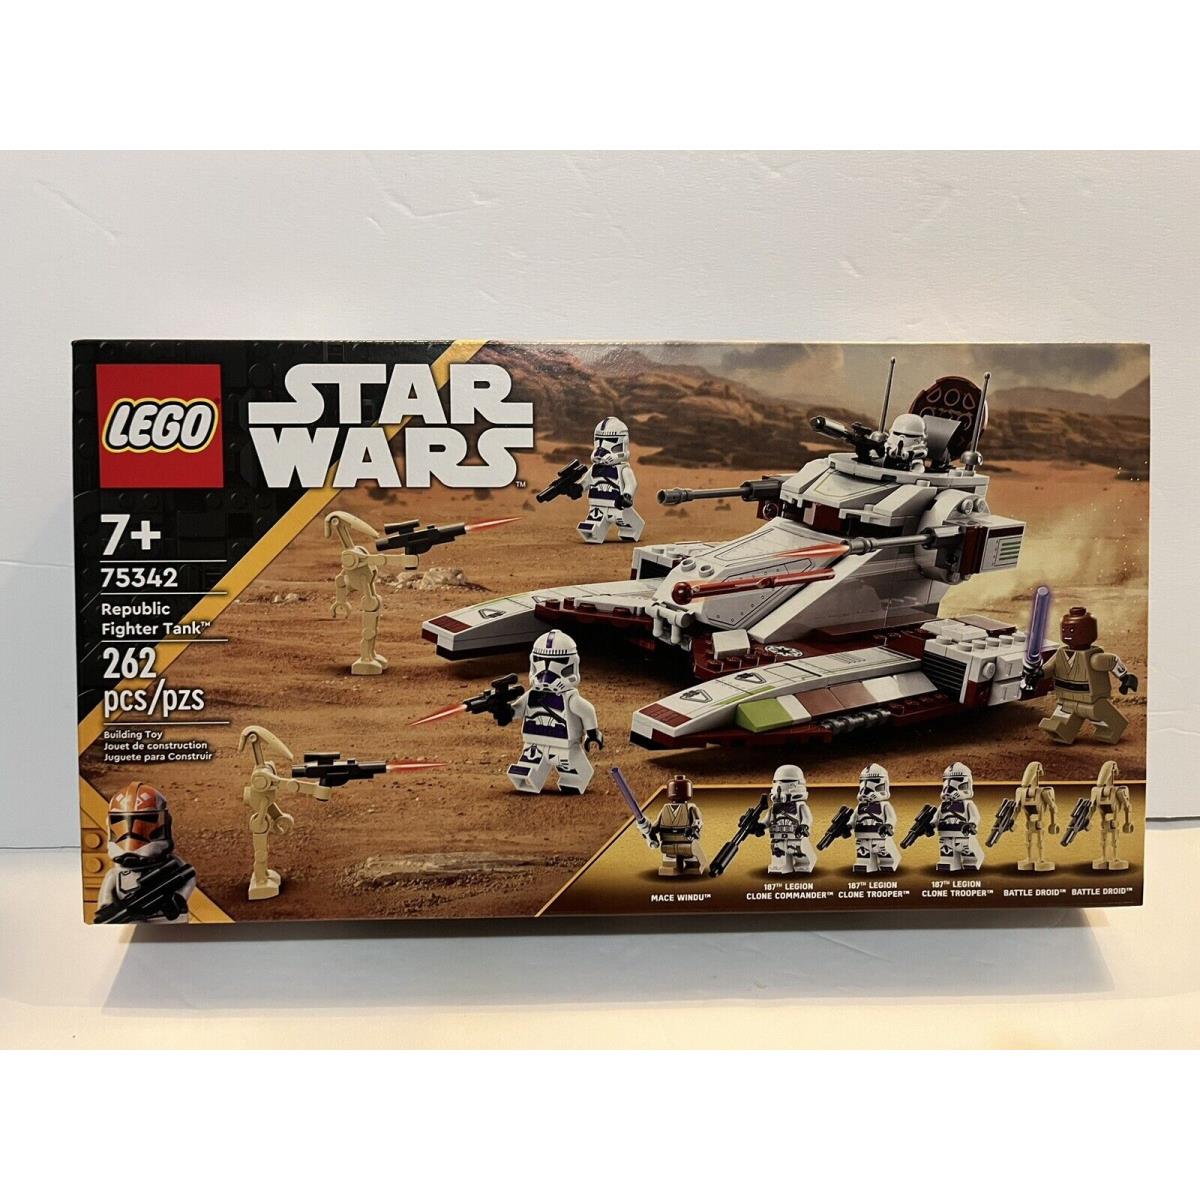 Lego Star Wars: Republic Fighter Tank 75342